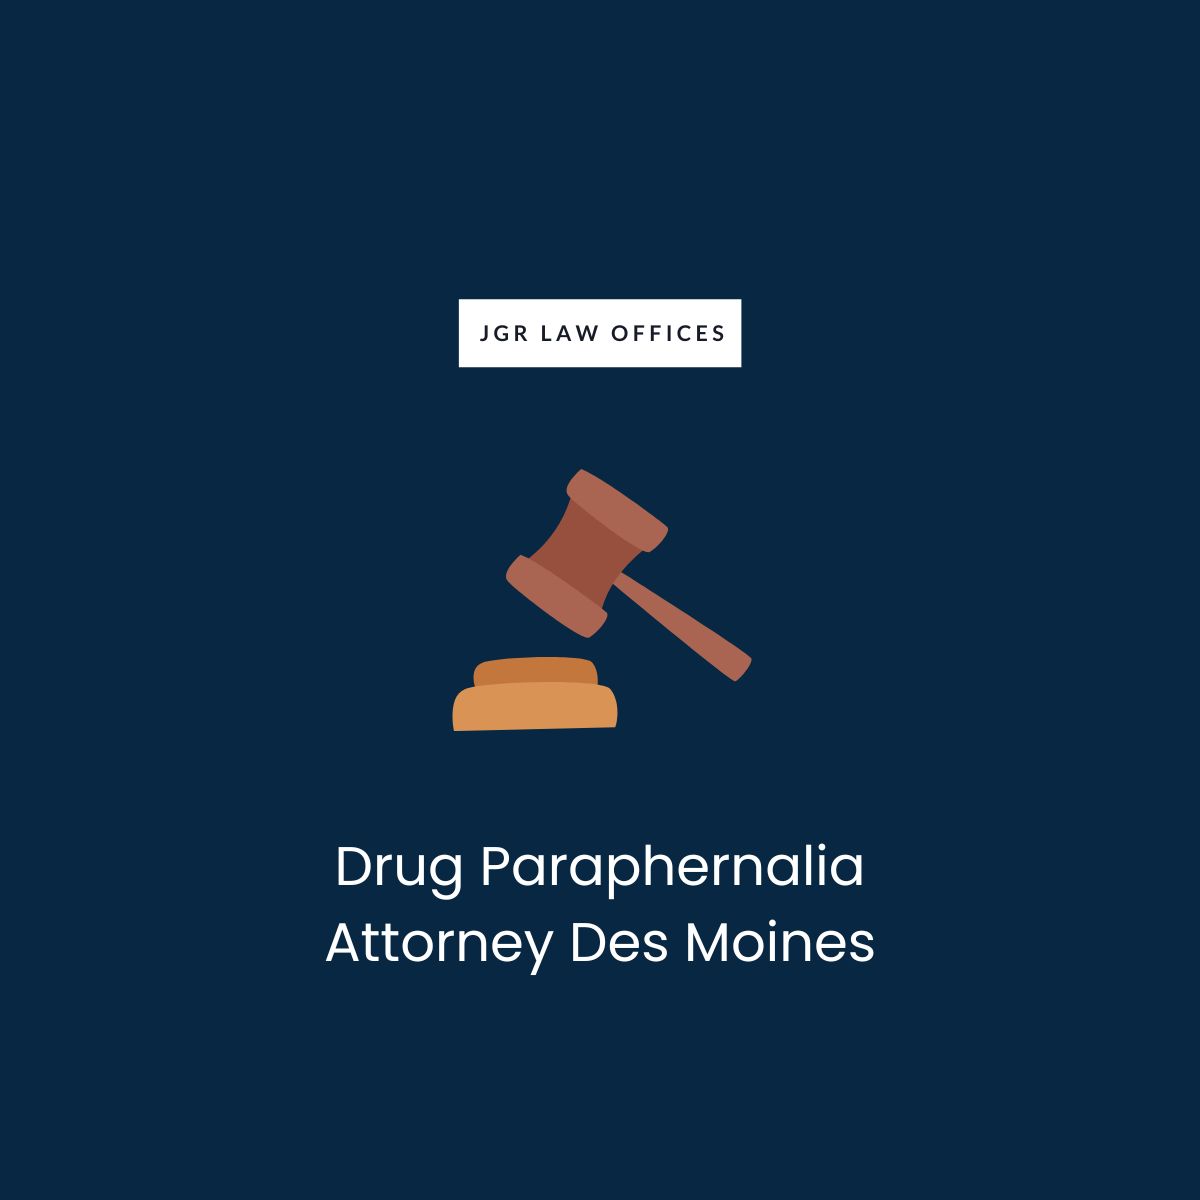 Drug Paraphernalia Attorney Des Moines